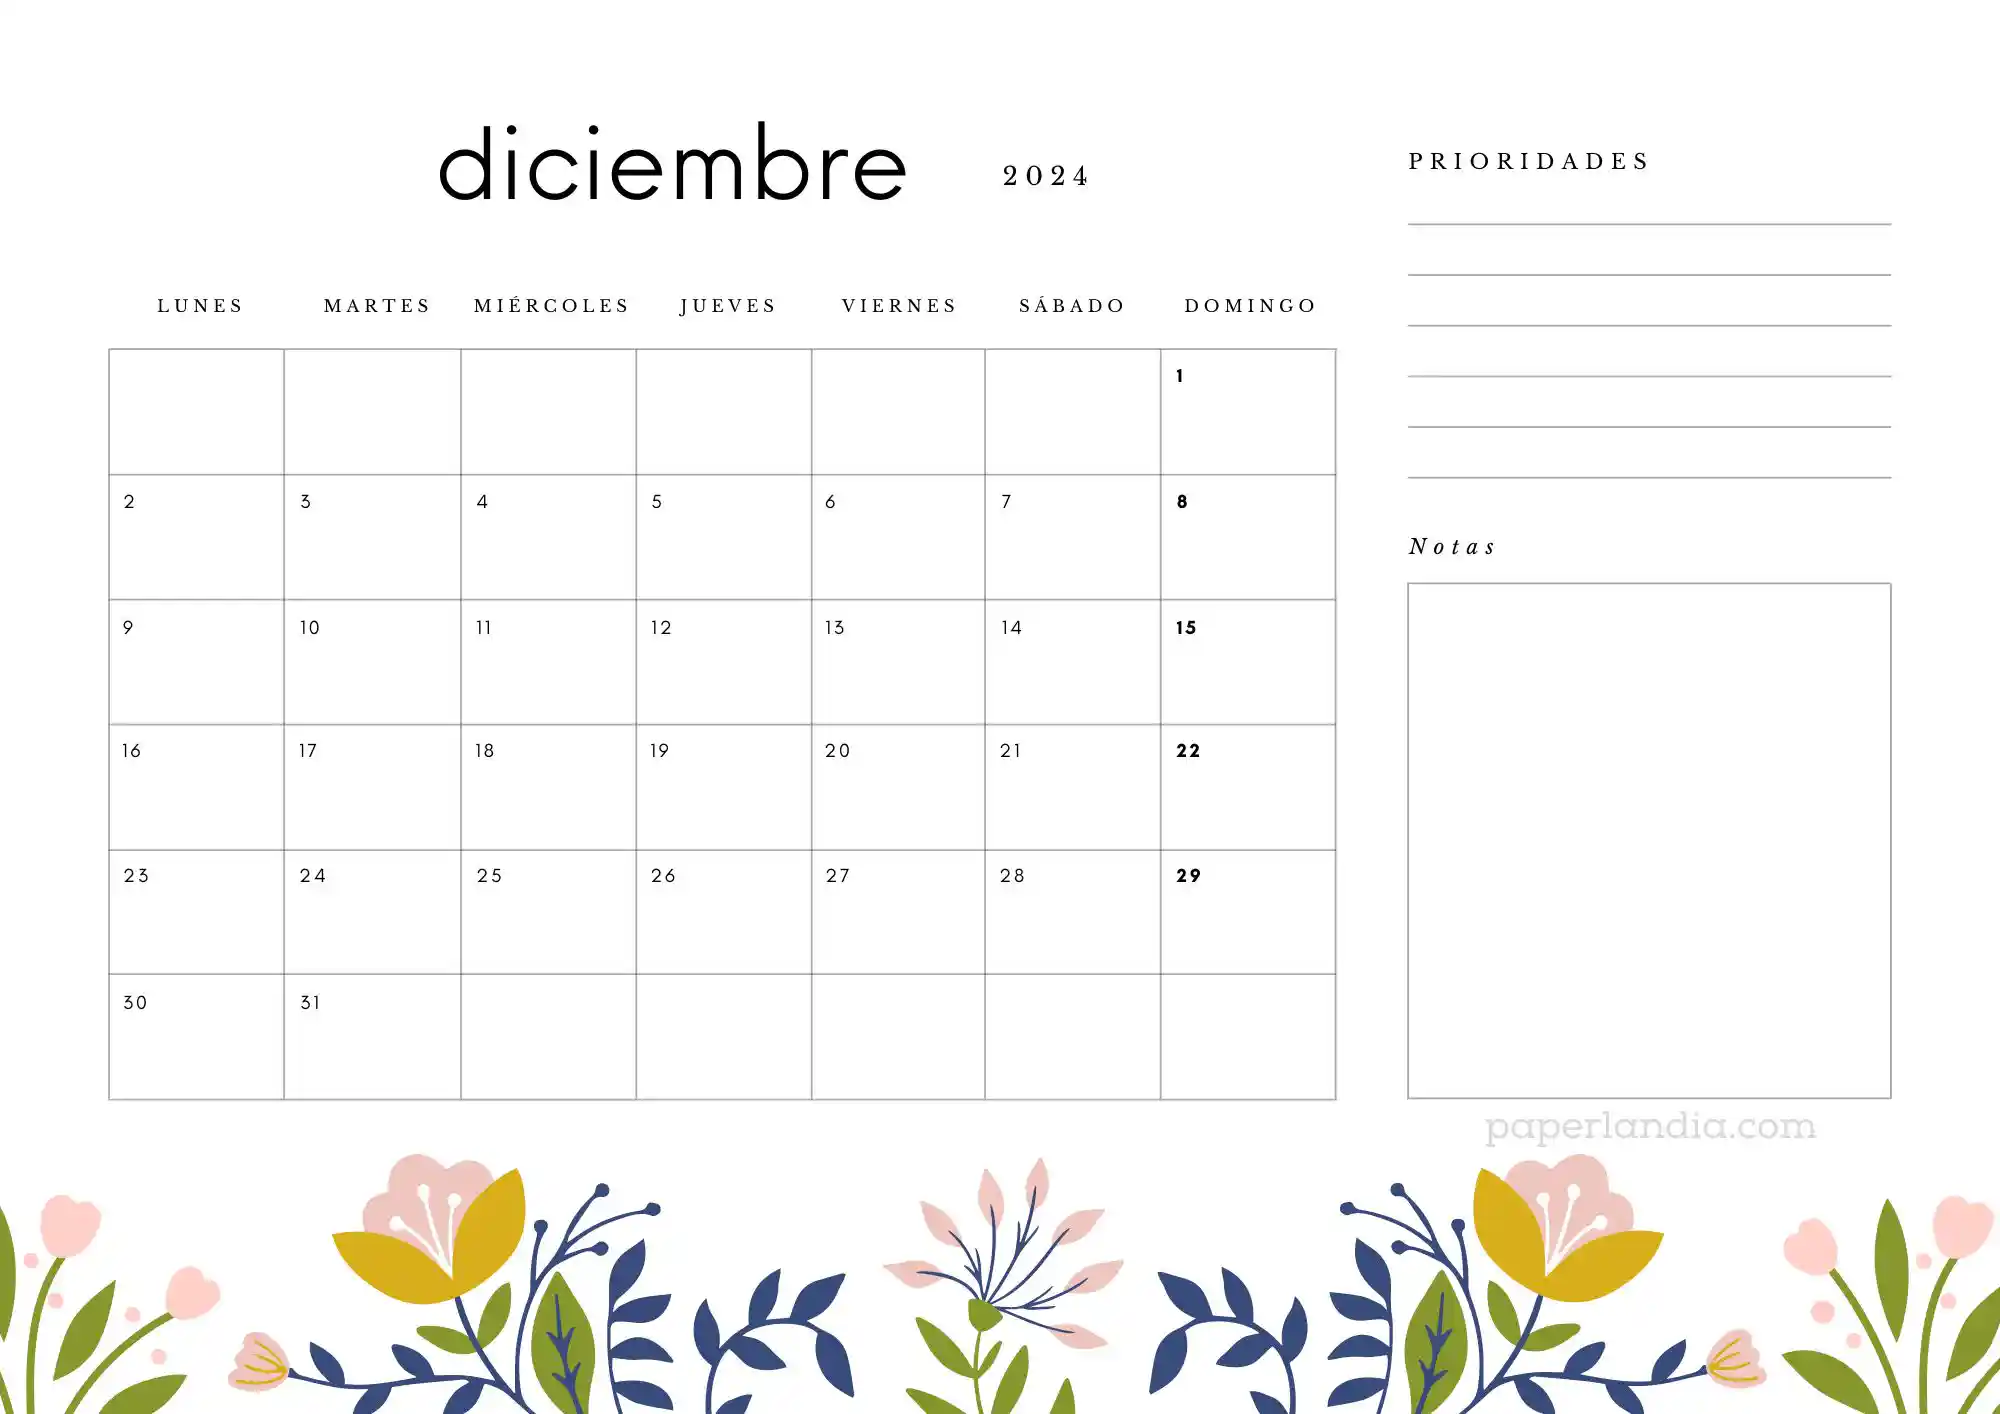 Calendario diciembre 2024 horizontal con prioridades notas y flores escandinavas